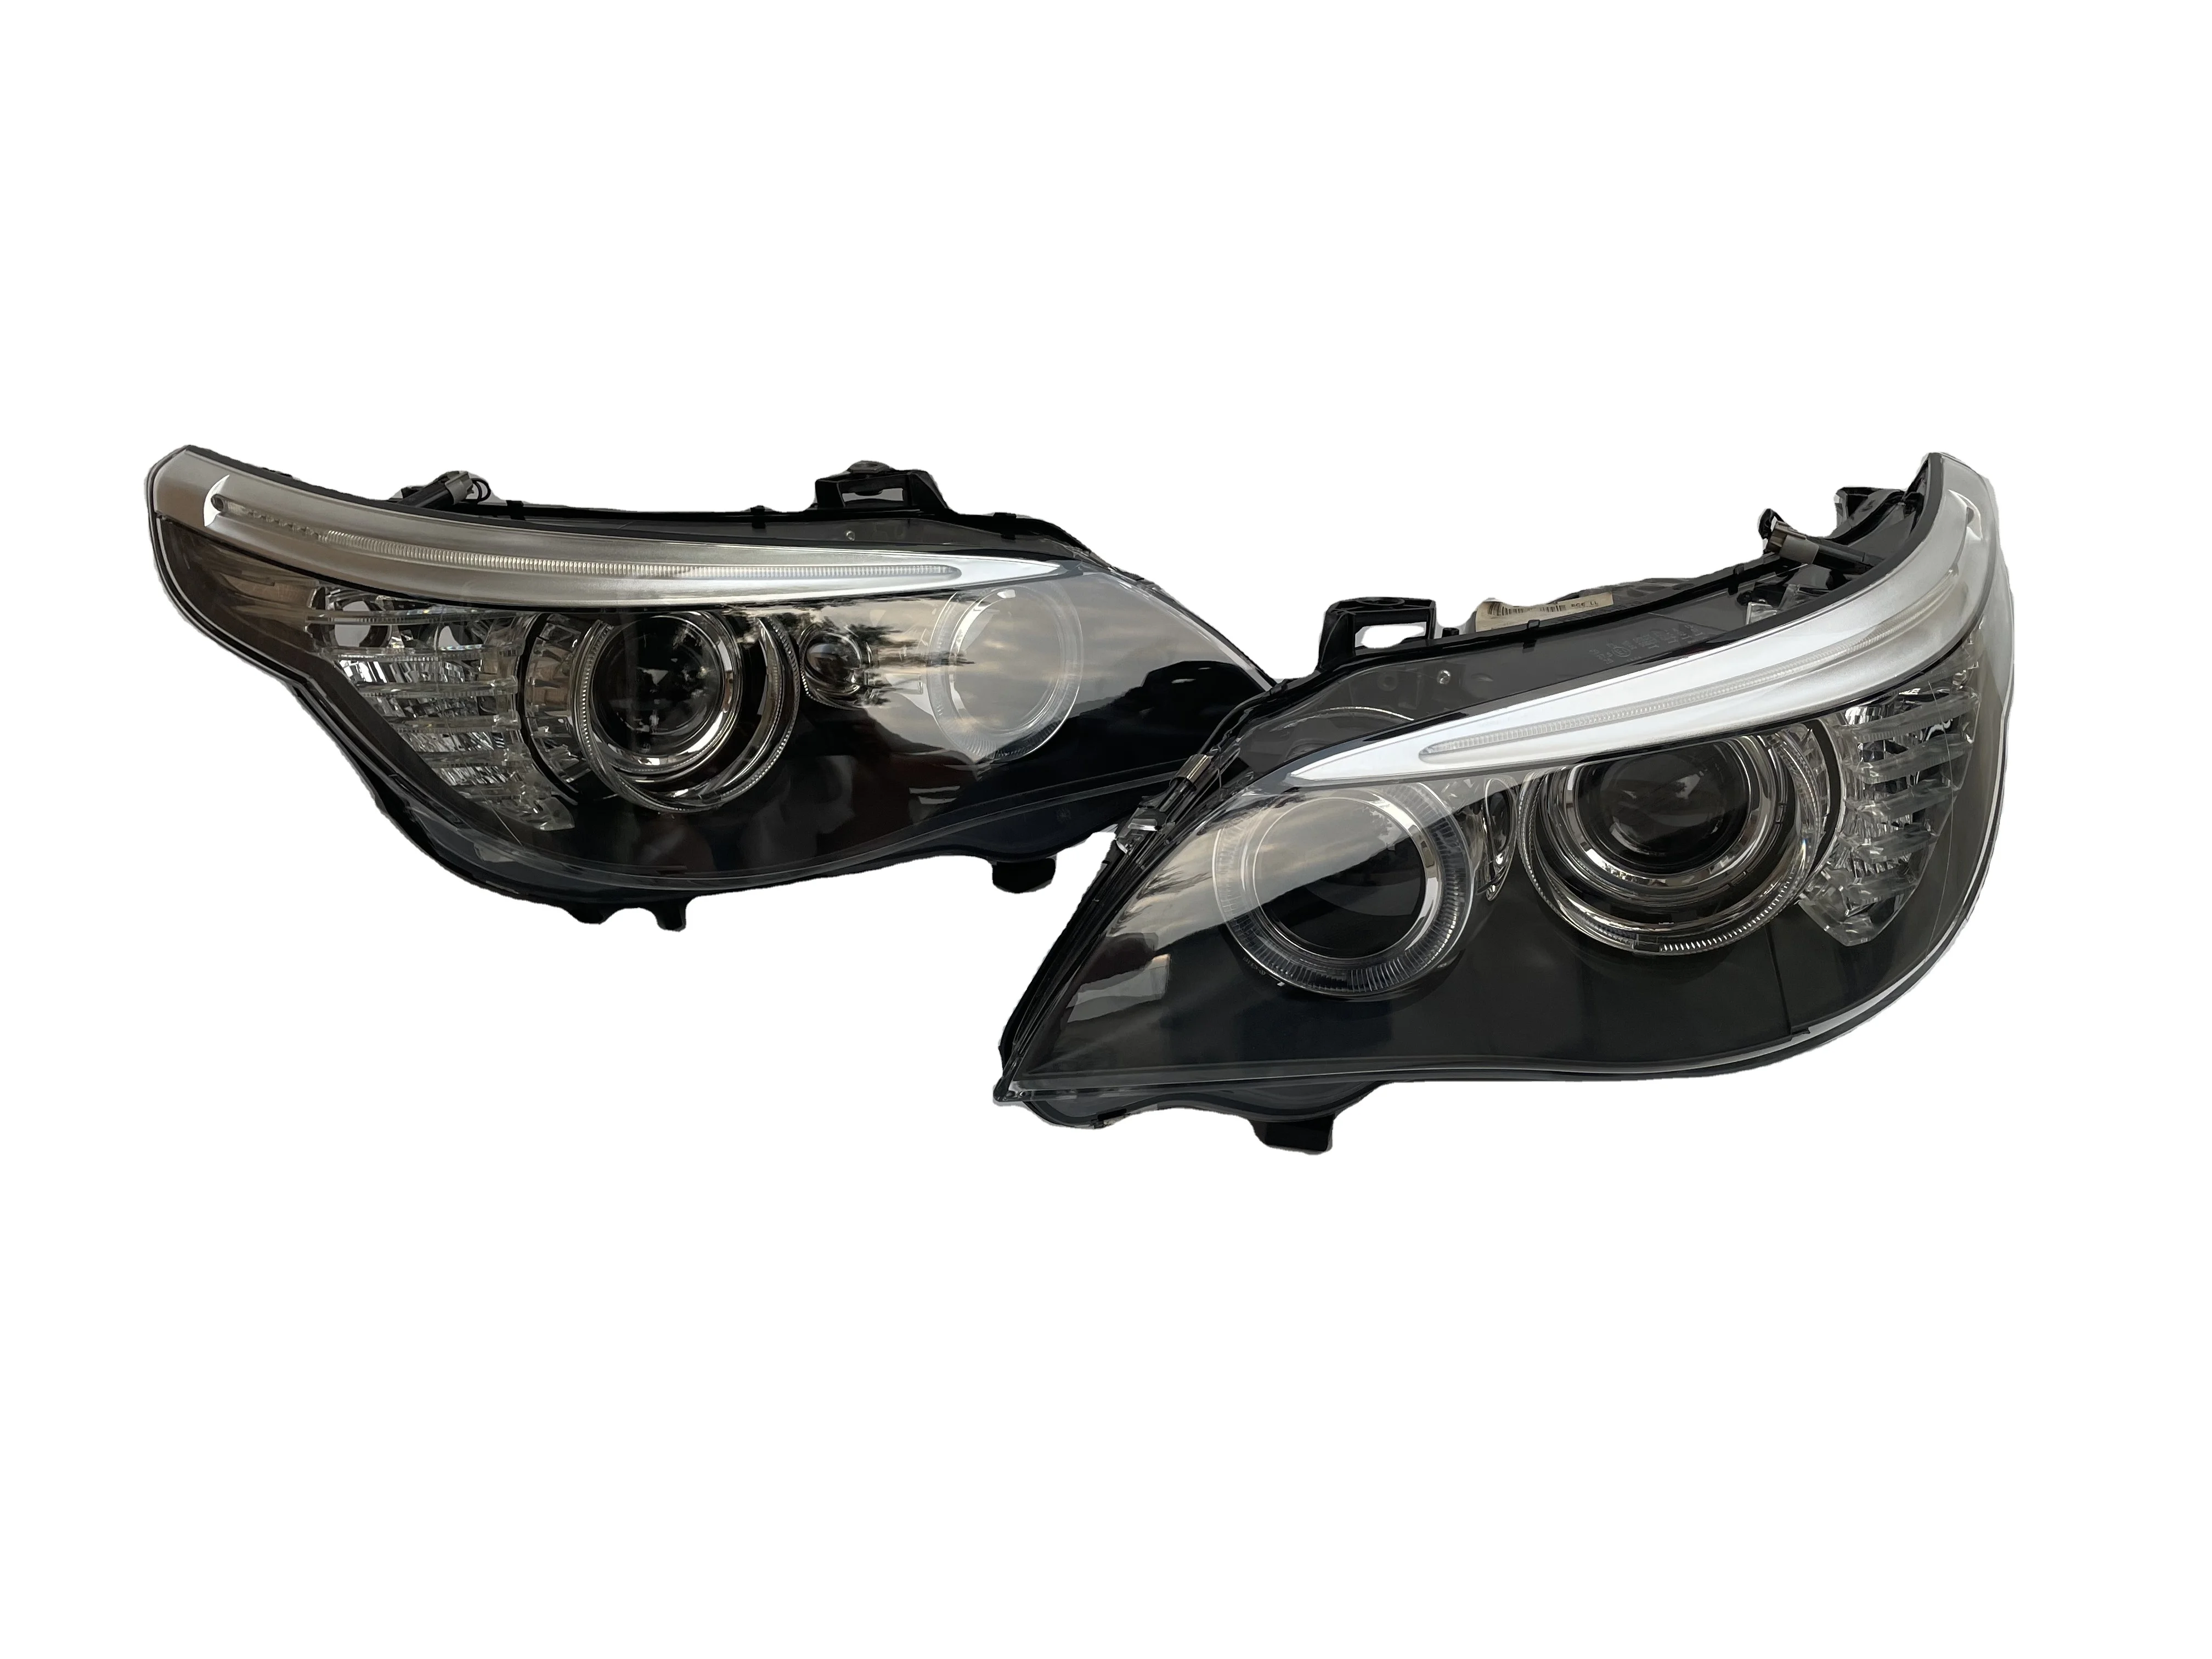 For BMW 5 Series E60 car headlight Factory Direct Sales High Quality Automotivecar lights led headlight